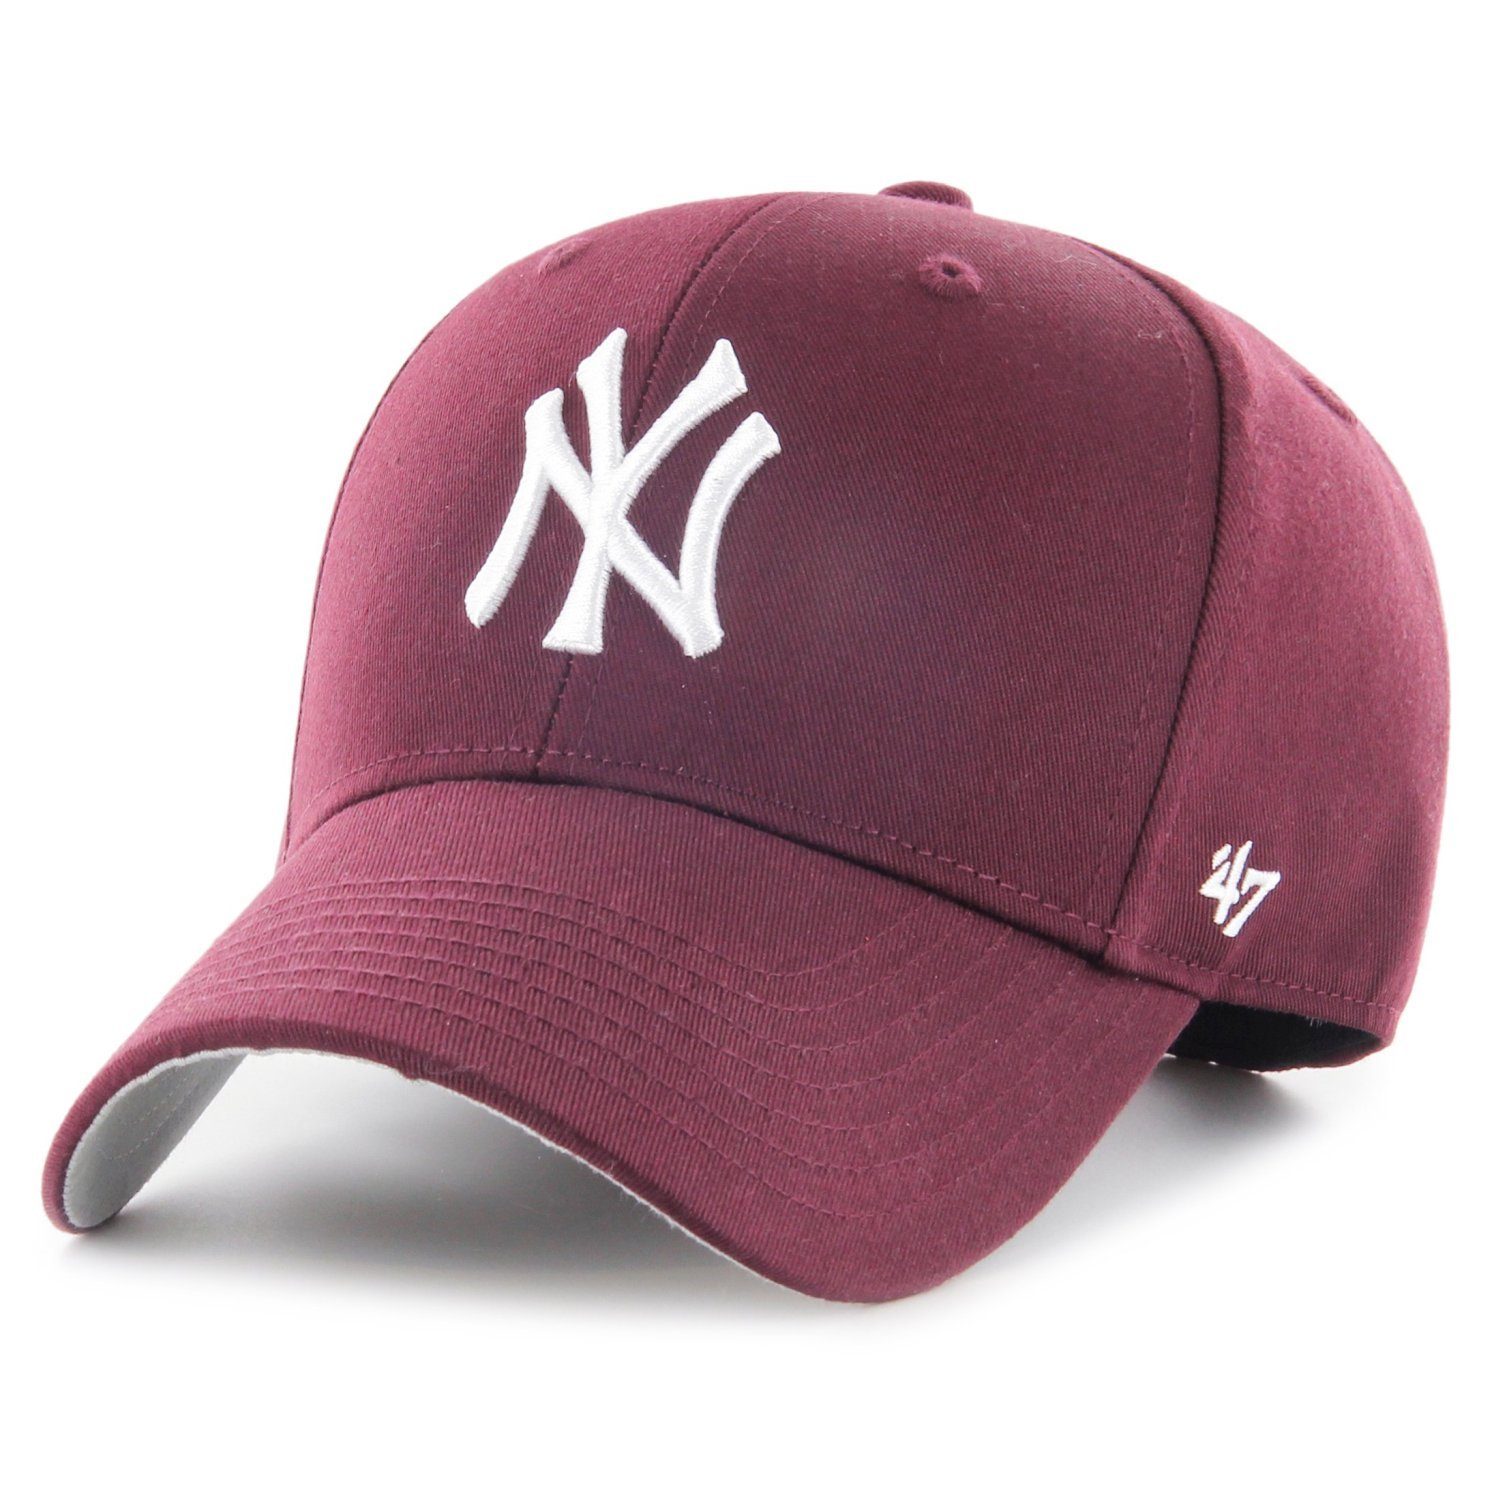 Baseball MLB Yankees Brand New Cap York '47